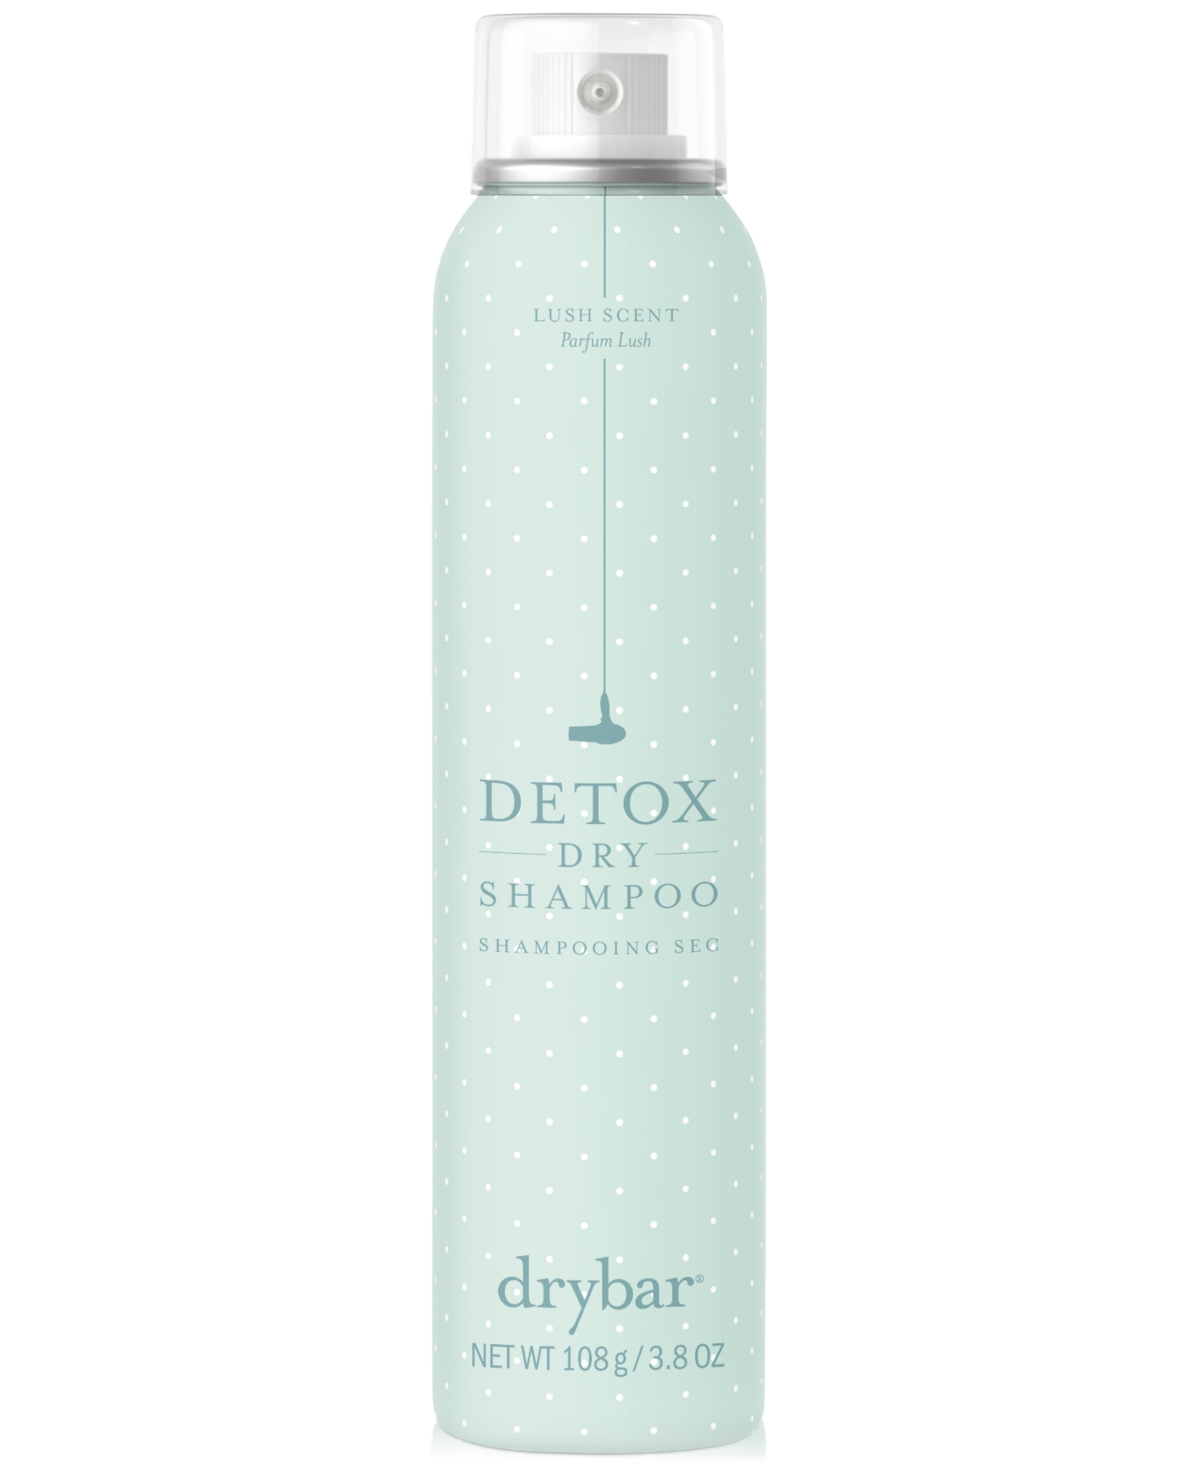 Detox Dry Shampoo - Lush Scent, 3.8 oz.